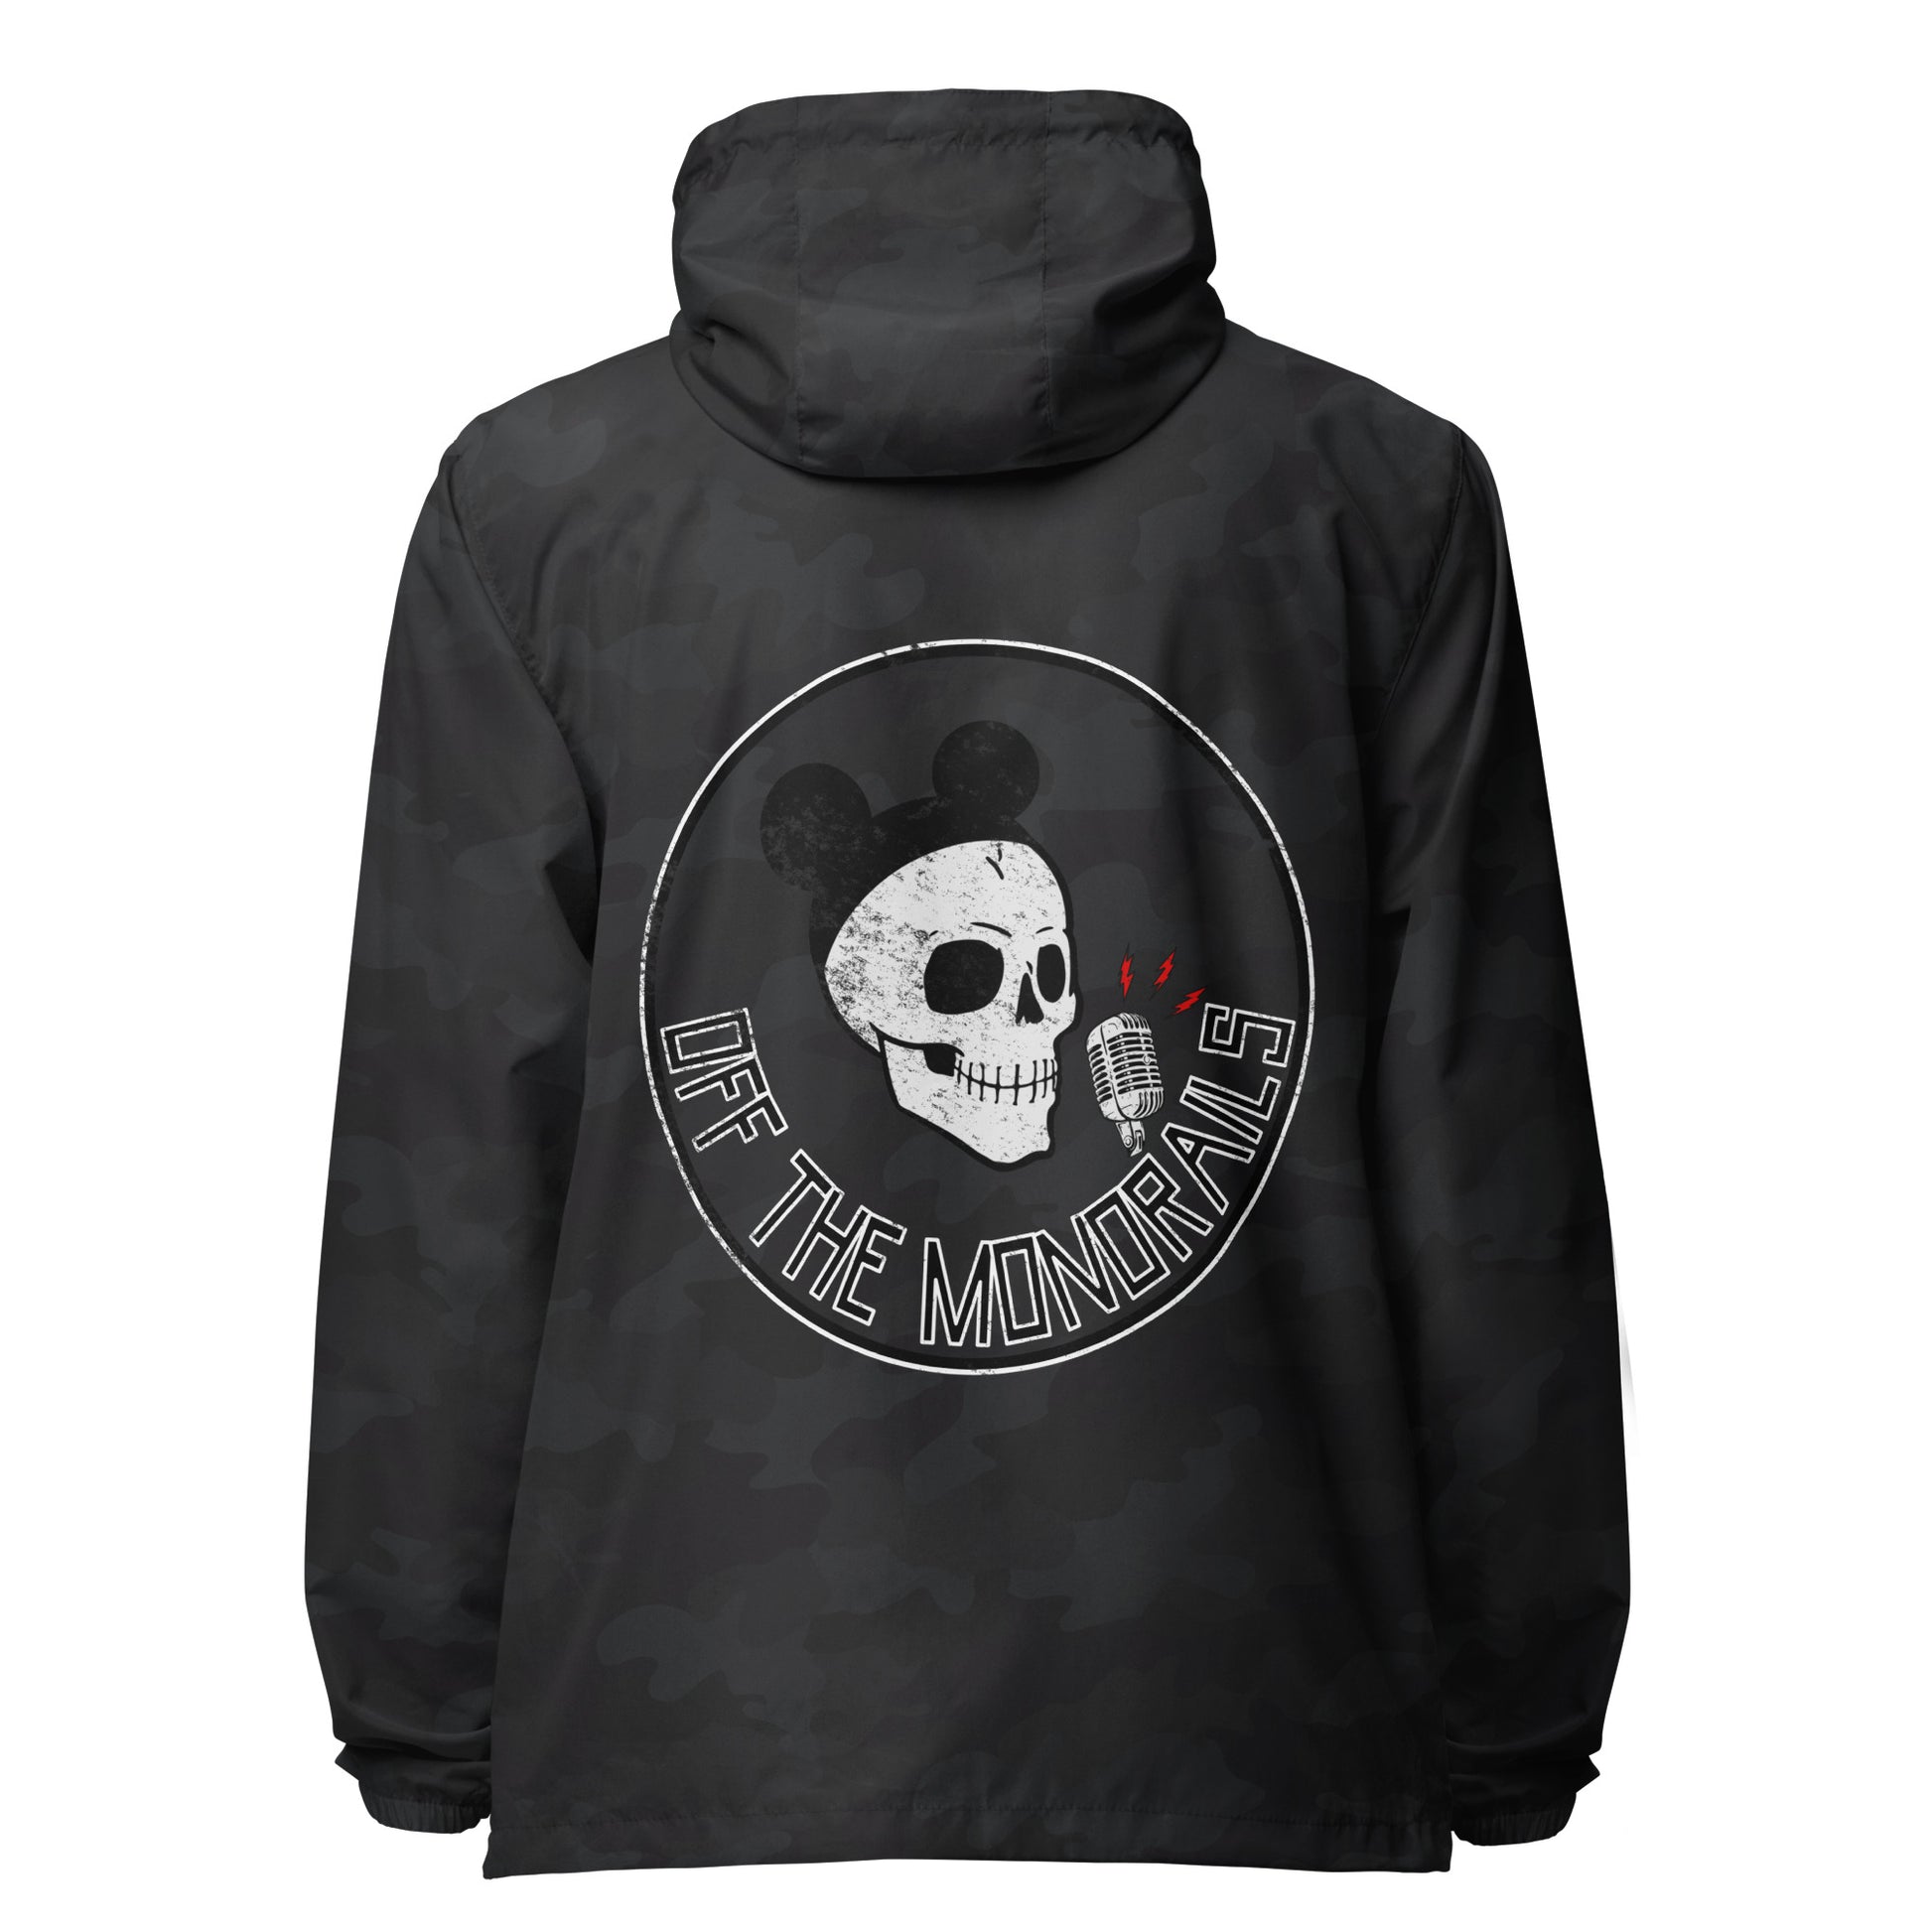 Off The Monorails Skull Emblem printed on Black camo windbreaker jacket